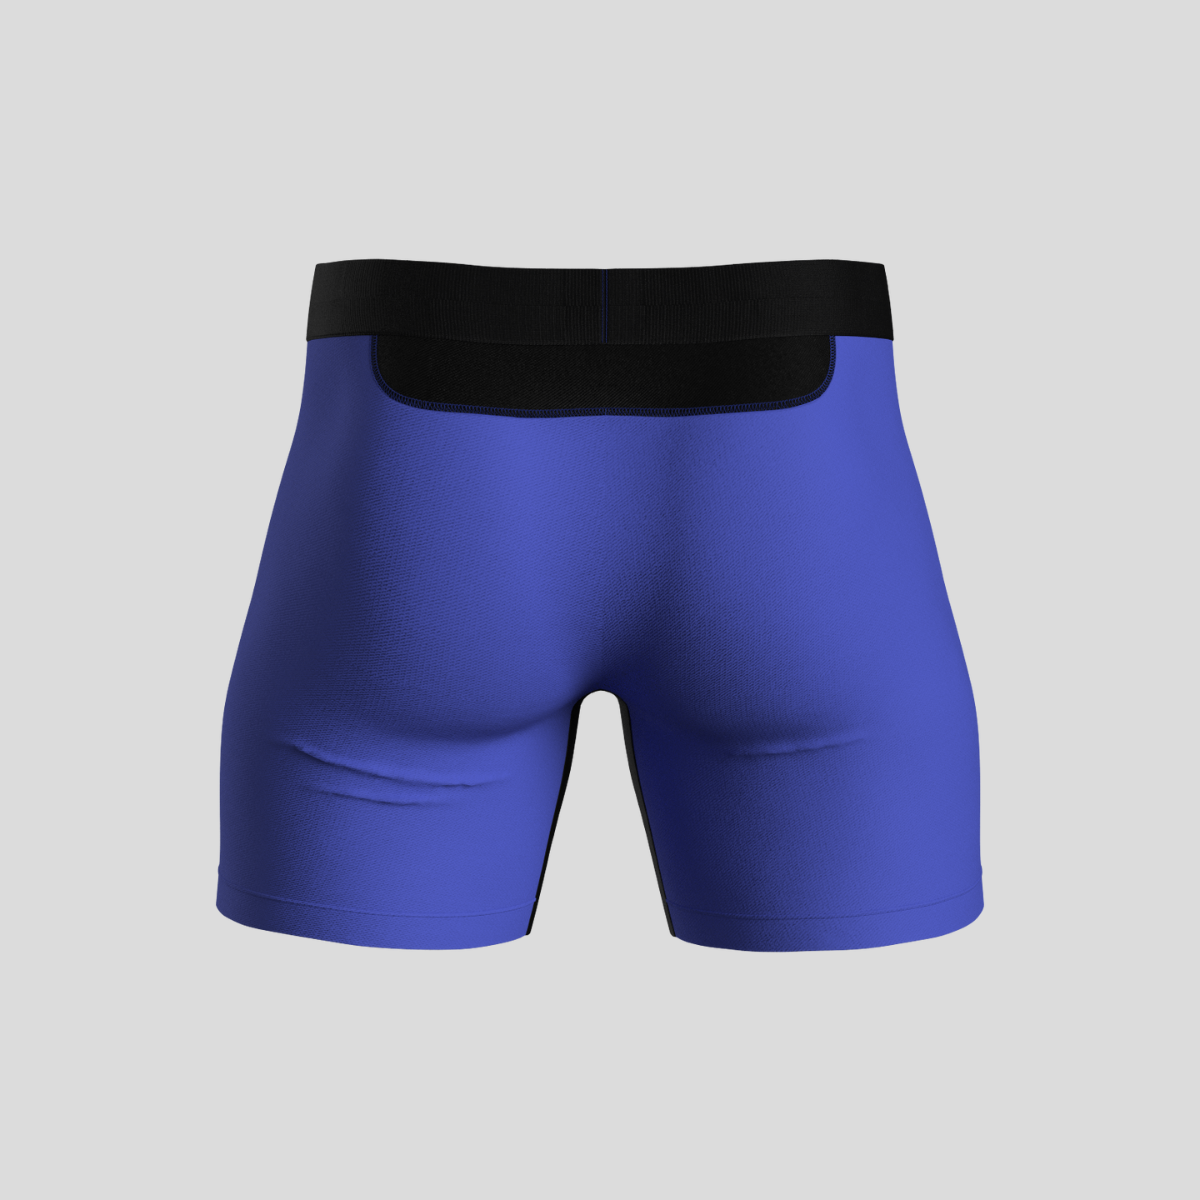 Blue Bamboo Boxer Brief Underwear for Men